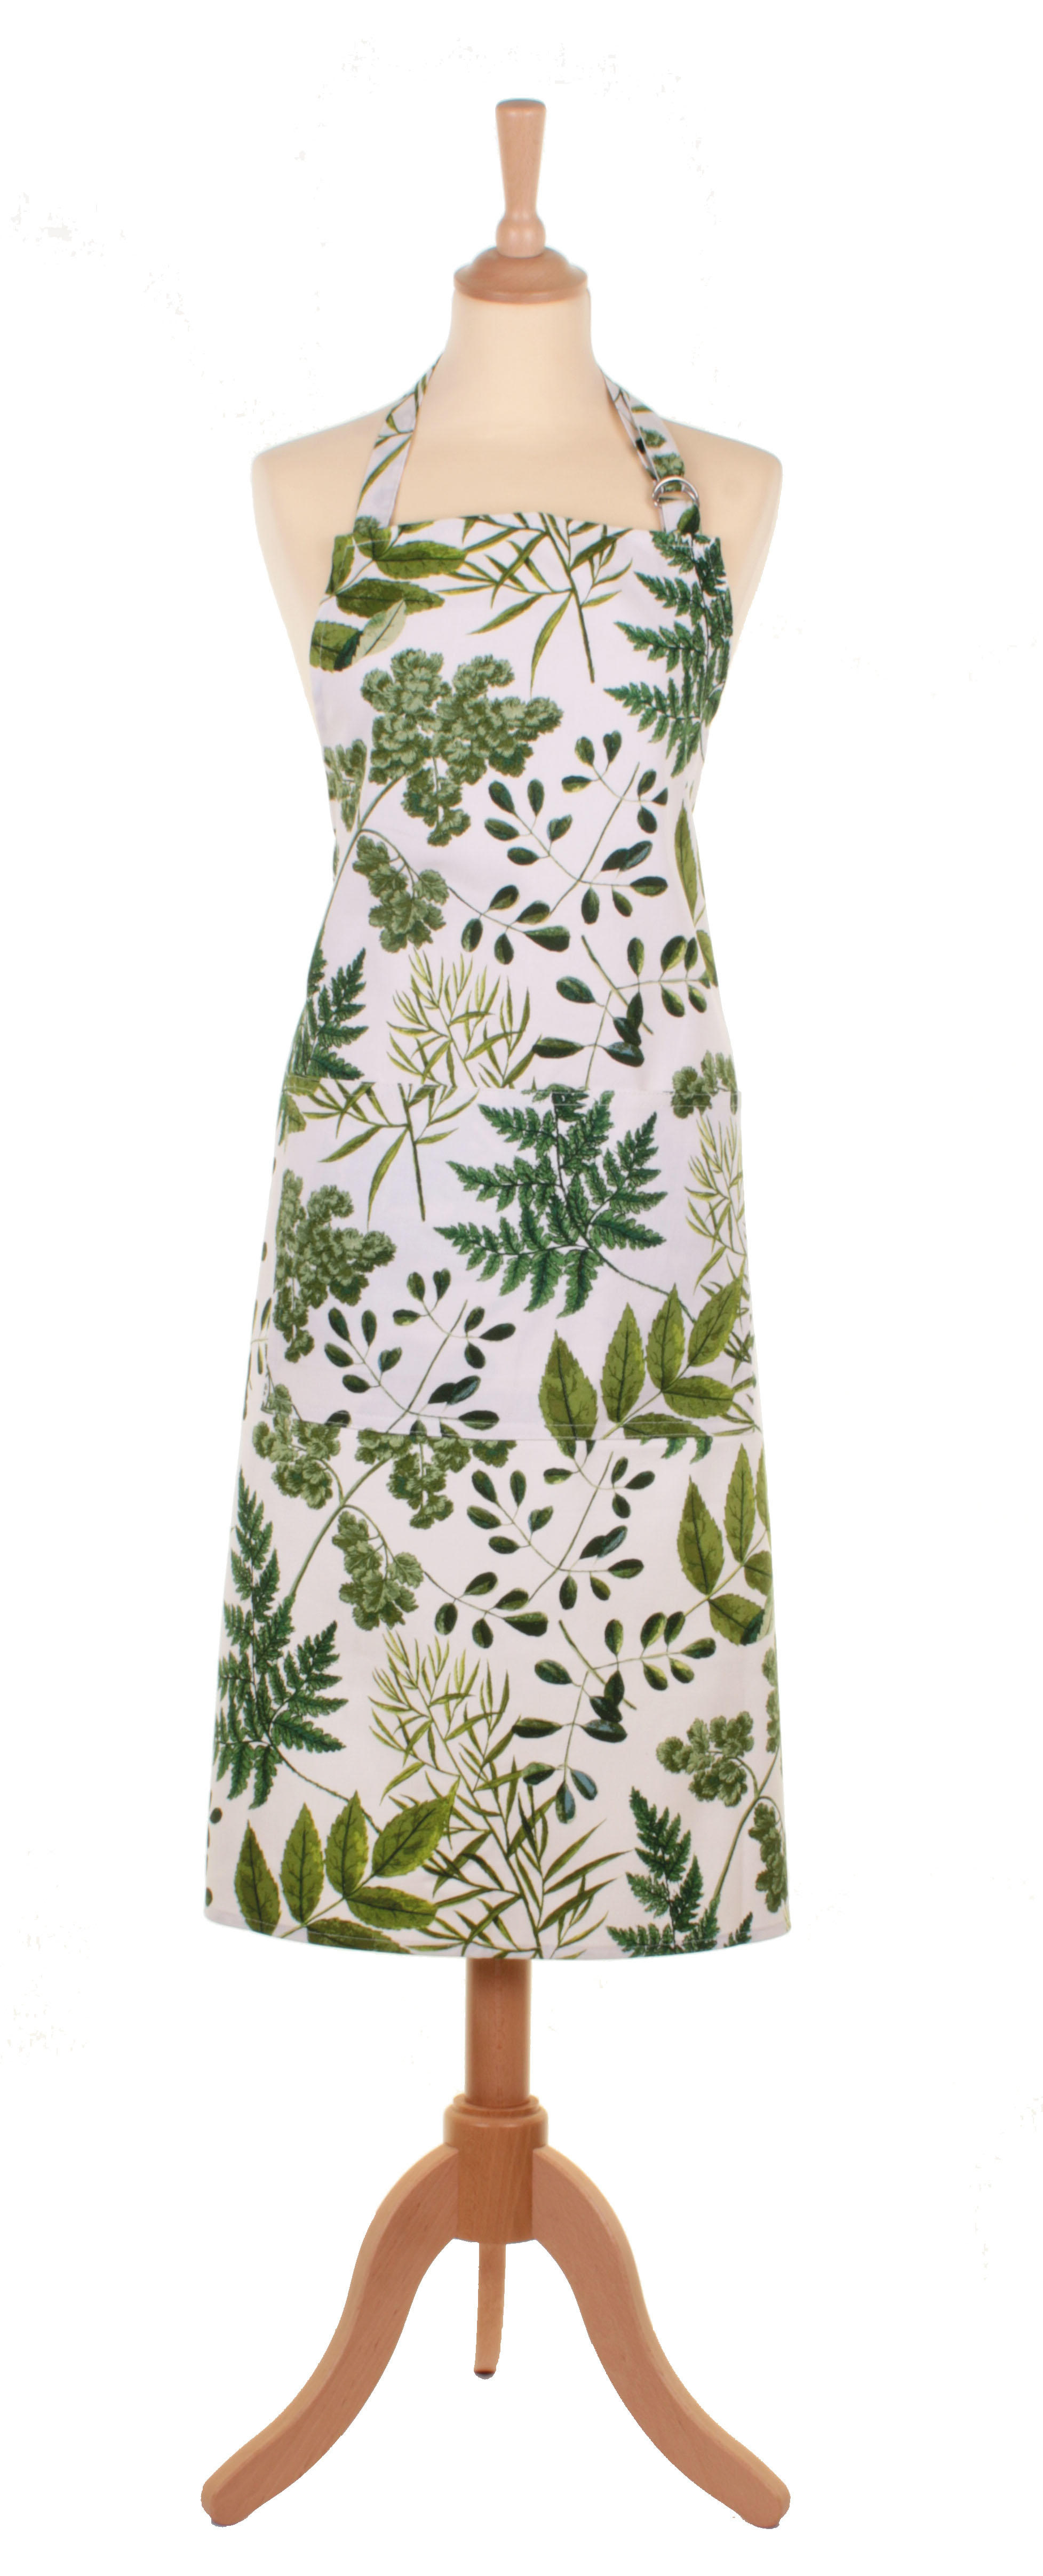 RHS Foliage cotton apron